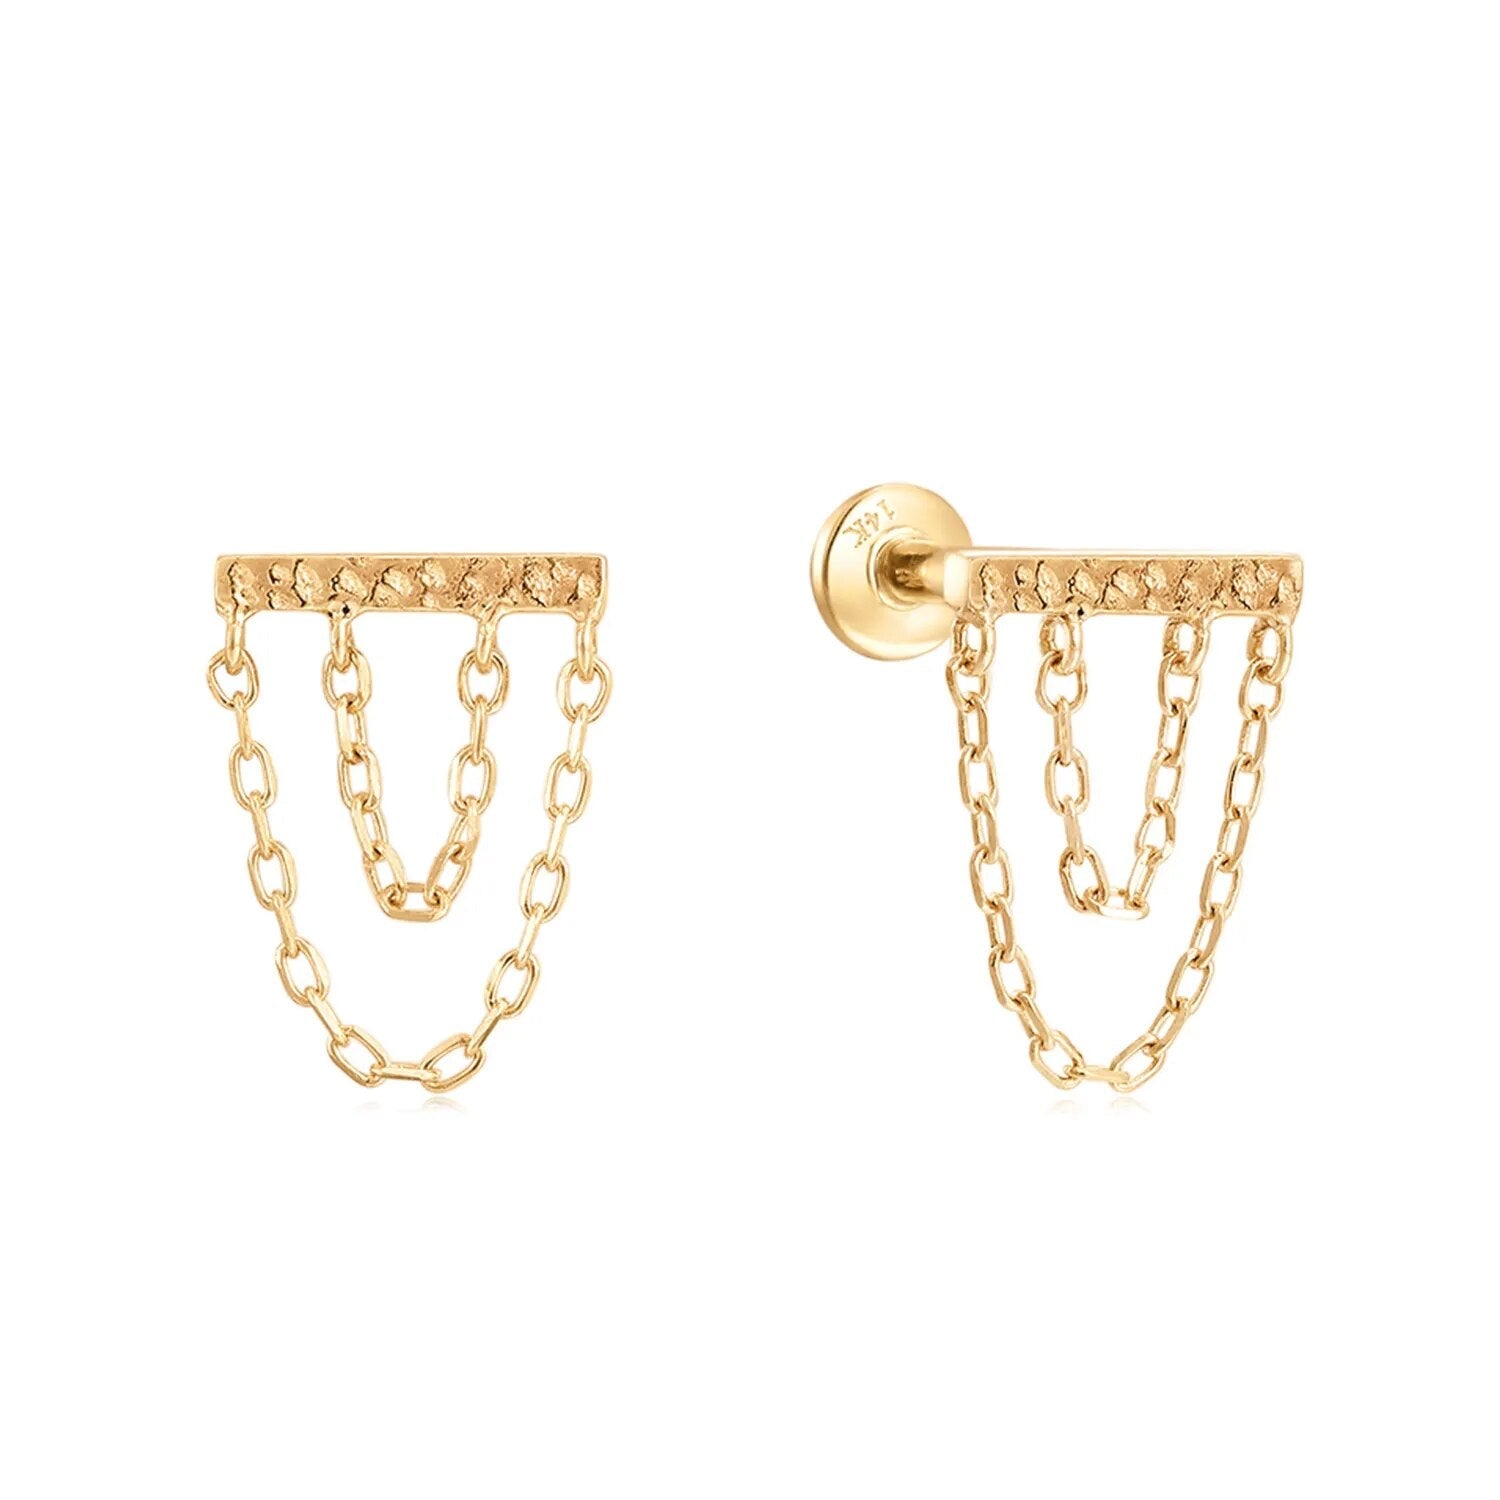 14K gold helix earring with chains conch earrings earlobe piercing jewelry labret stud Ashley Piercing Jewelry